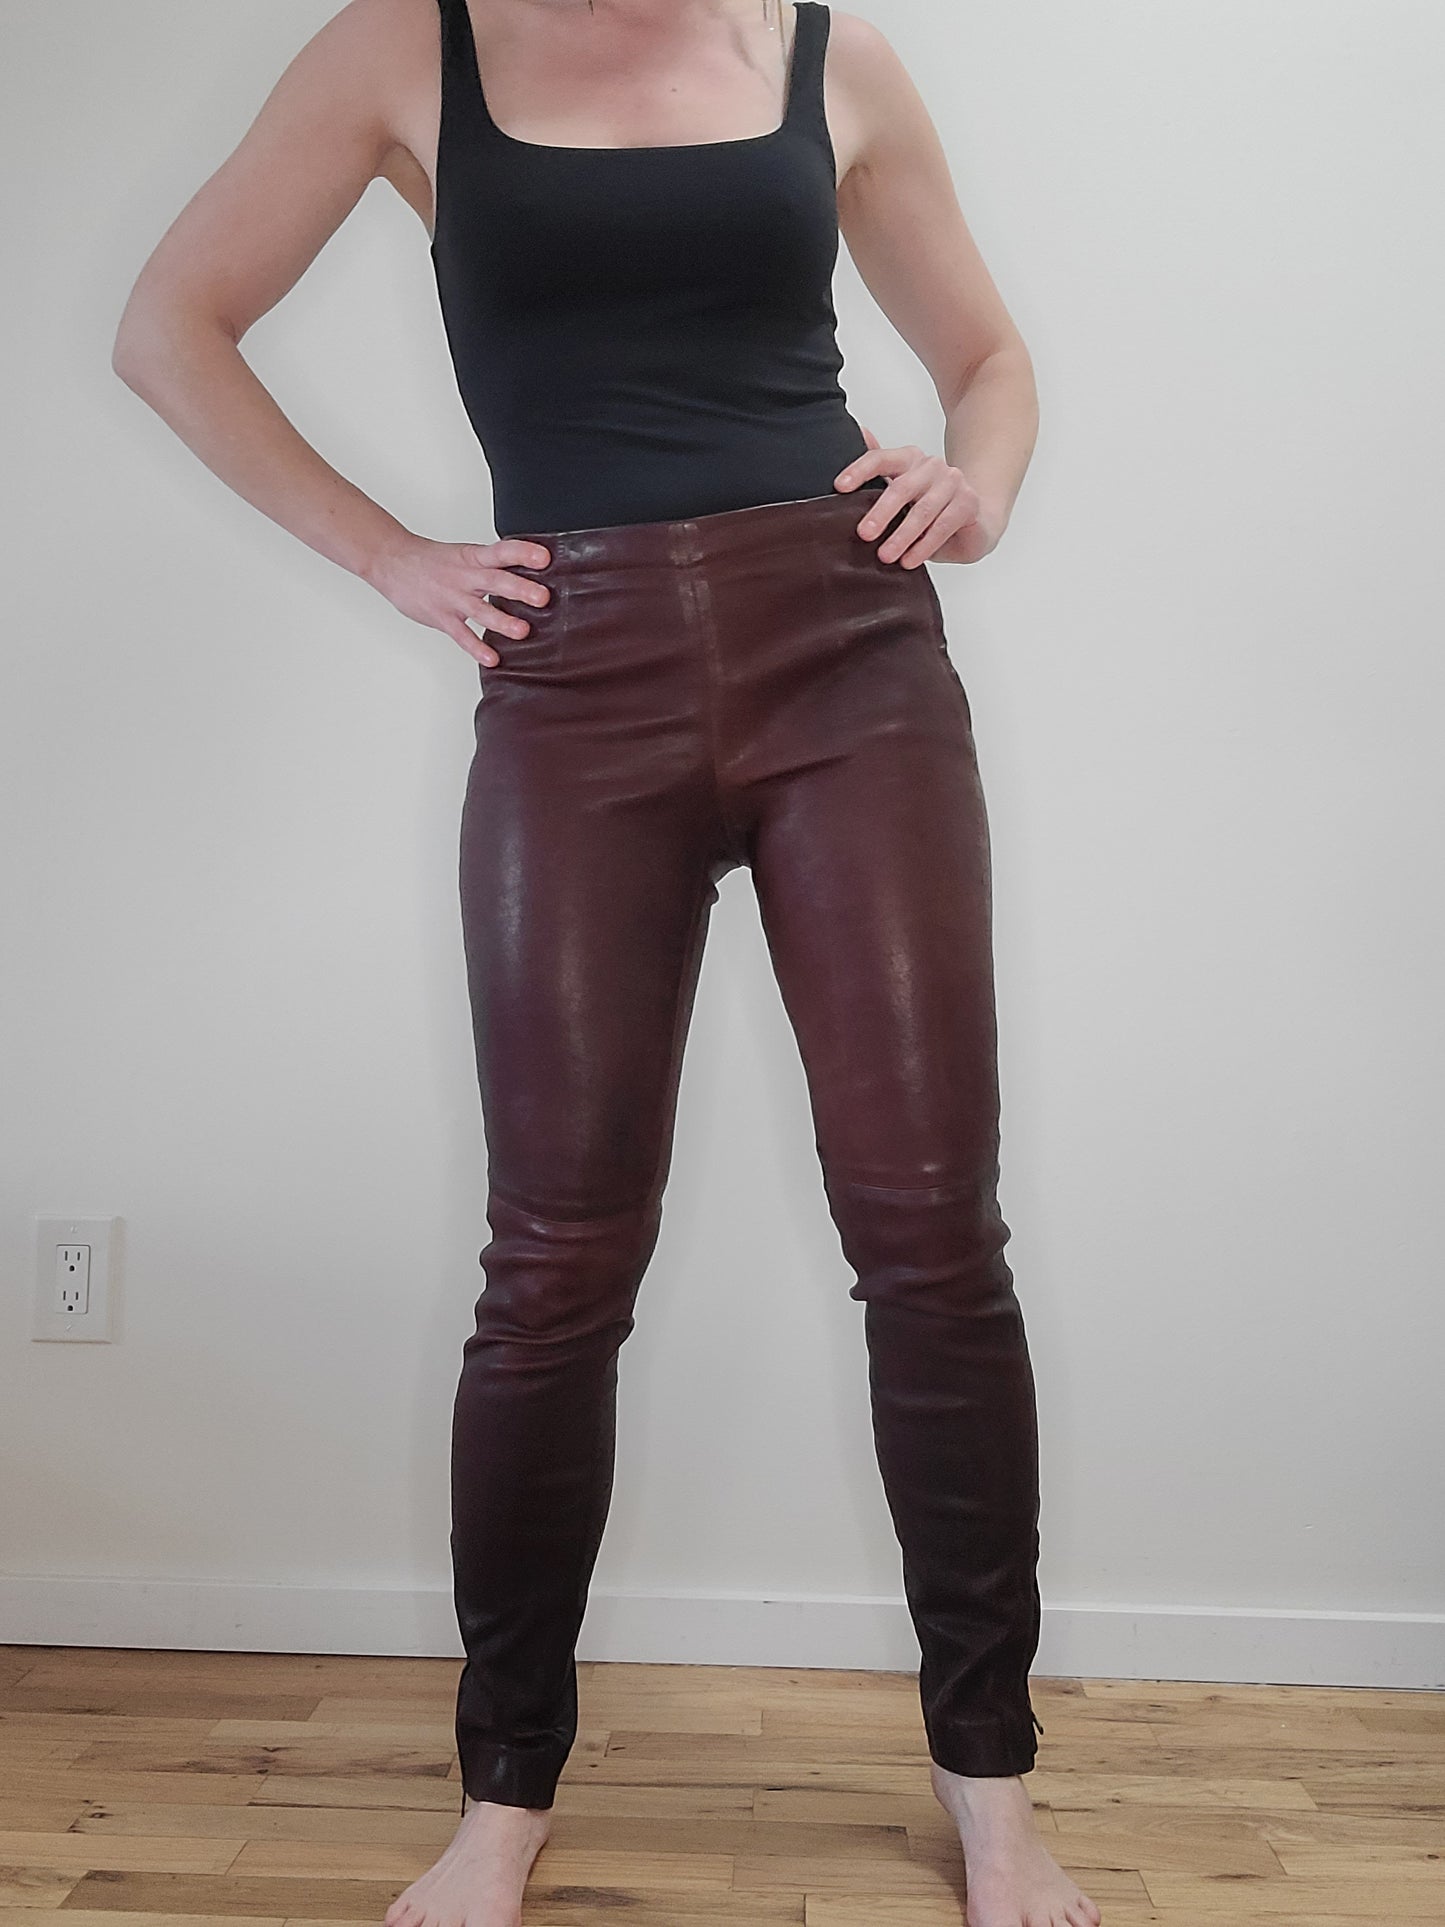 Kaufman Franco Mahogany Leather Pants 8